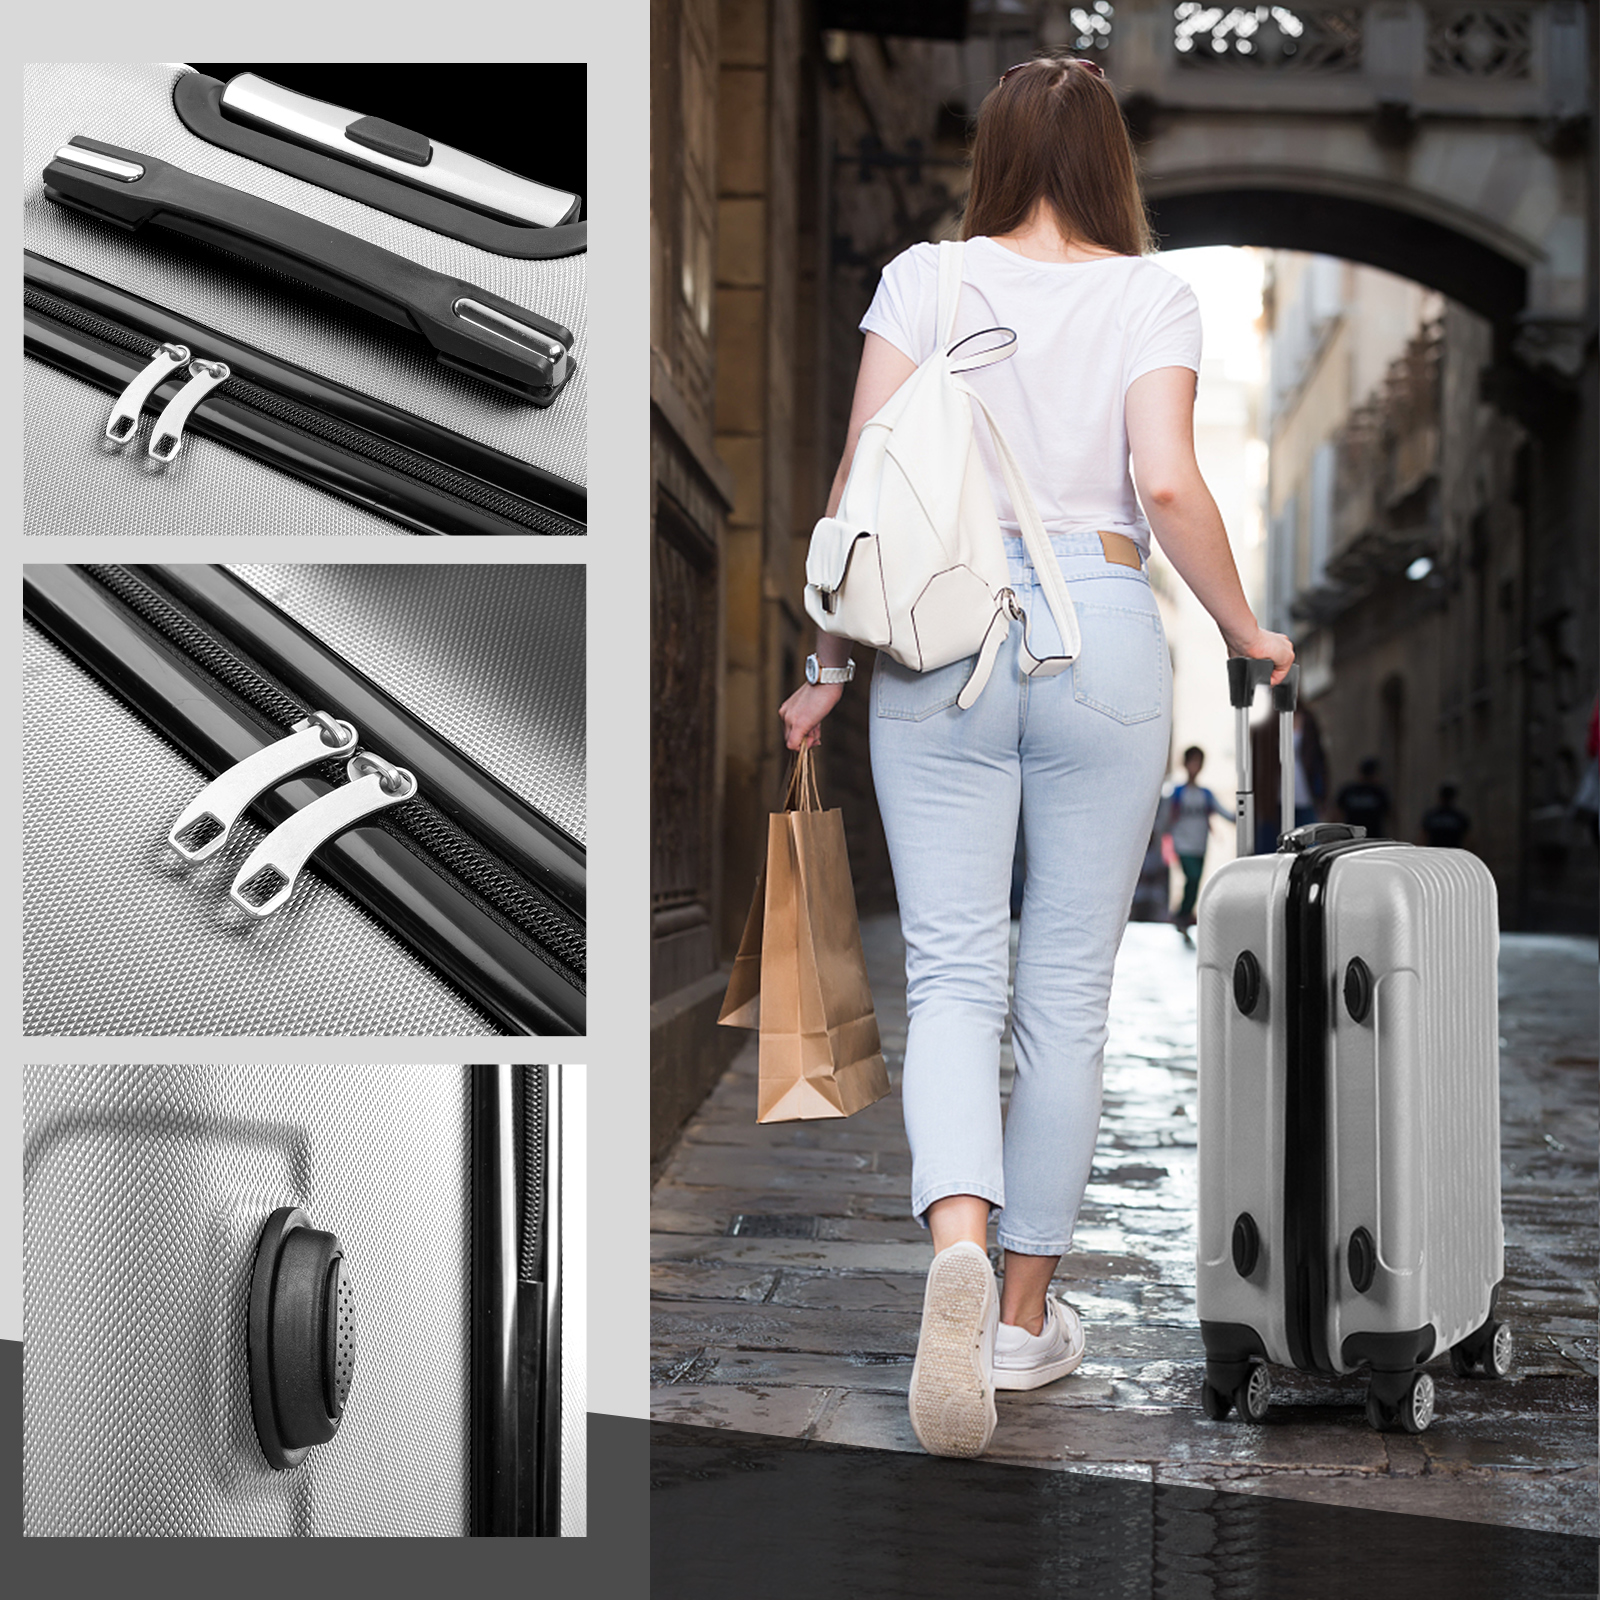 Zimtown 3 Piece Nested Spinner Suitcase Luggage Set With TSA Lock Gray - image 4 of 13